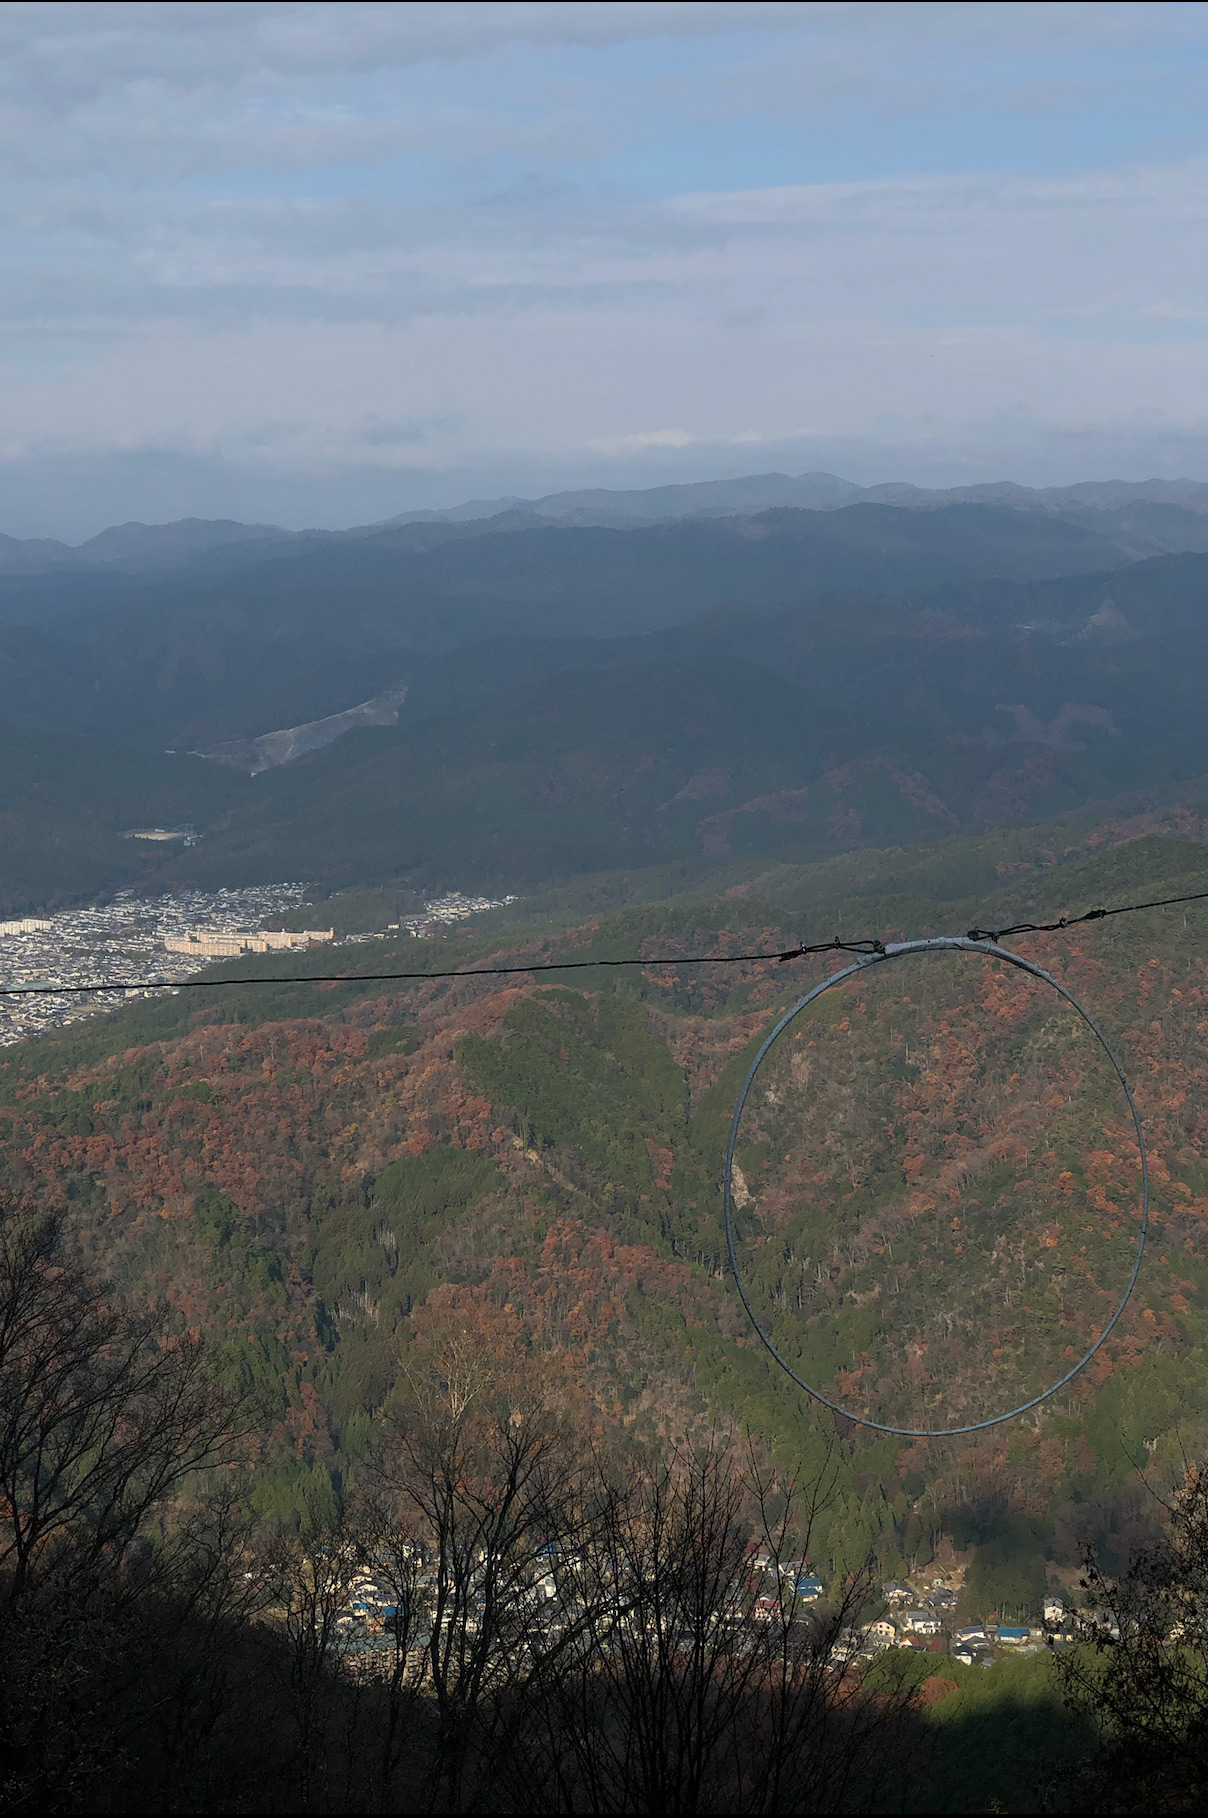 Enryaku-ji sits atop Mt Hiei, which borders both Kyoto and Shiga prefectures.